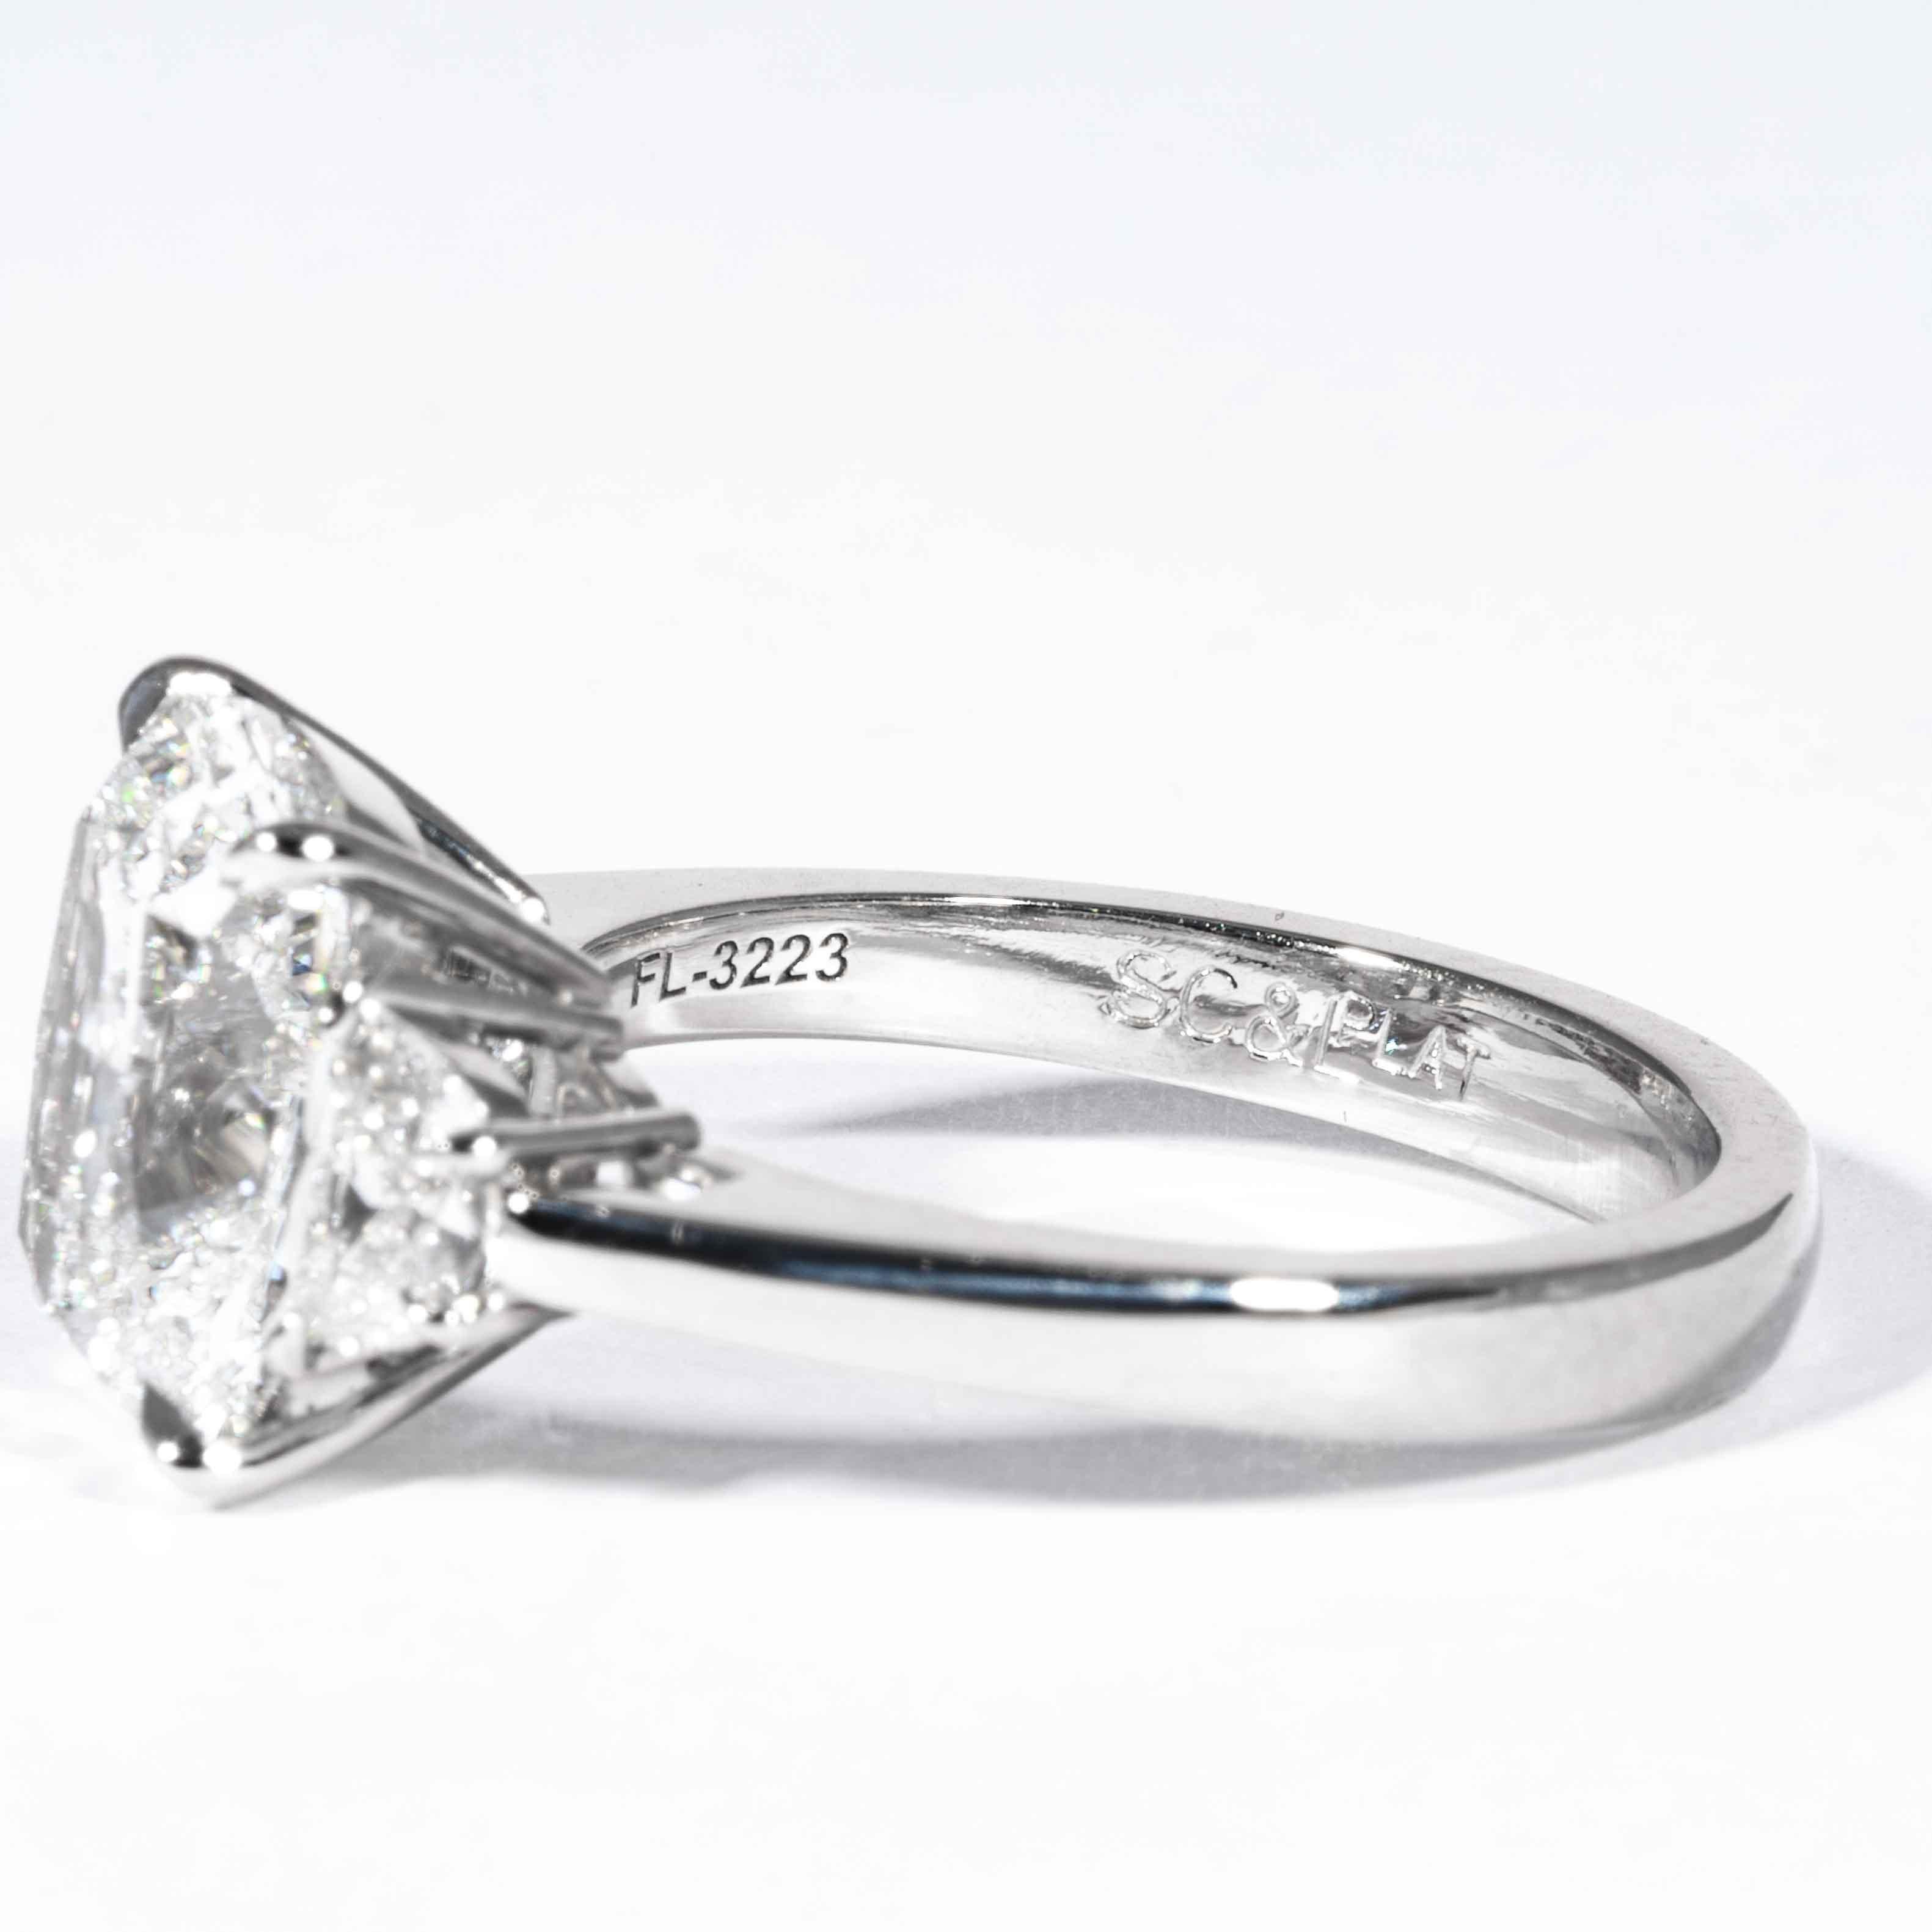 Shreve, Crump & Low GIA Certified 4.10 Carat E SI1 Cushion Cut Diamond Plat Ring 3